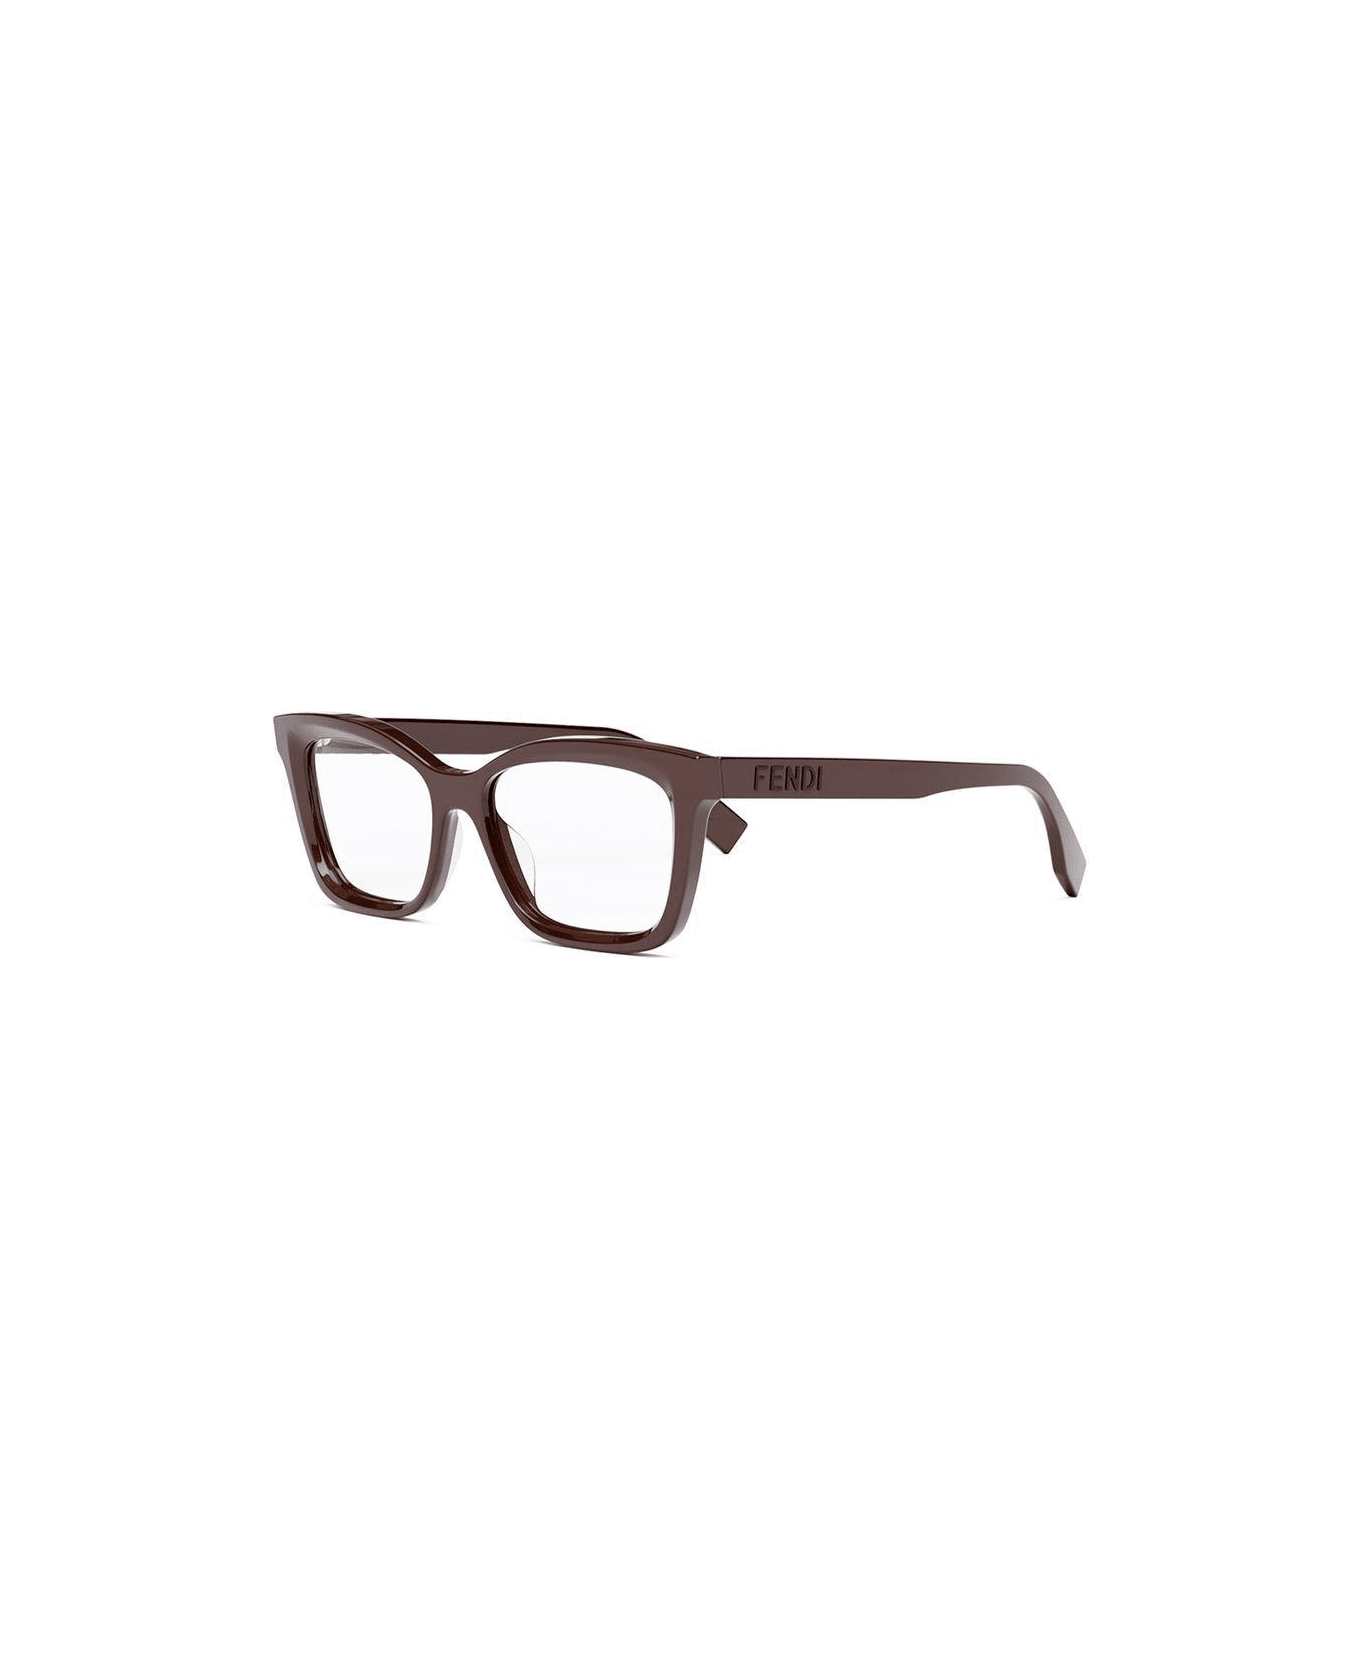 Fendi Eyewear Rectangle Frame Glasses - 066